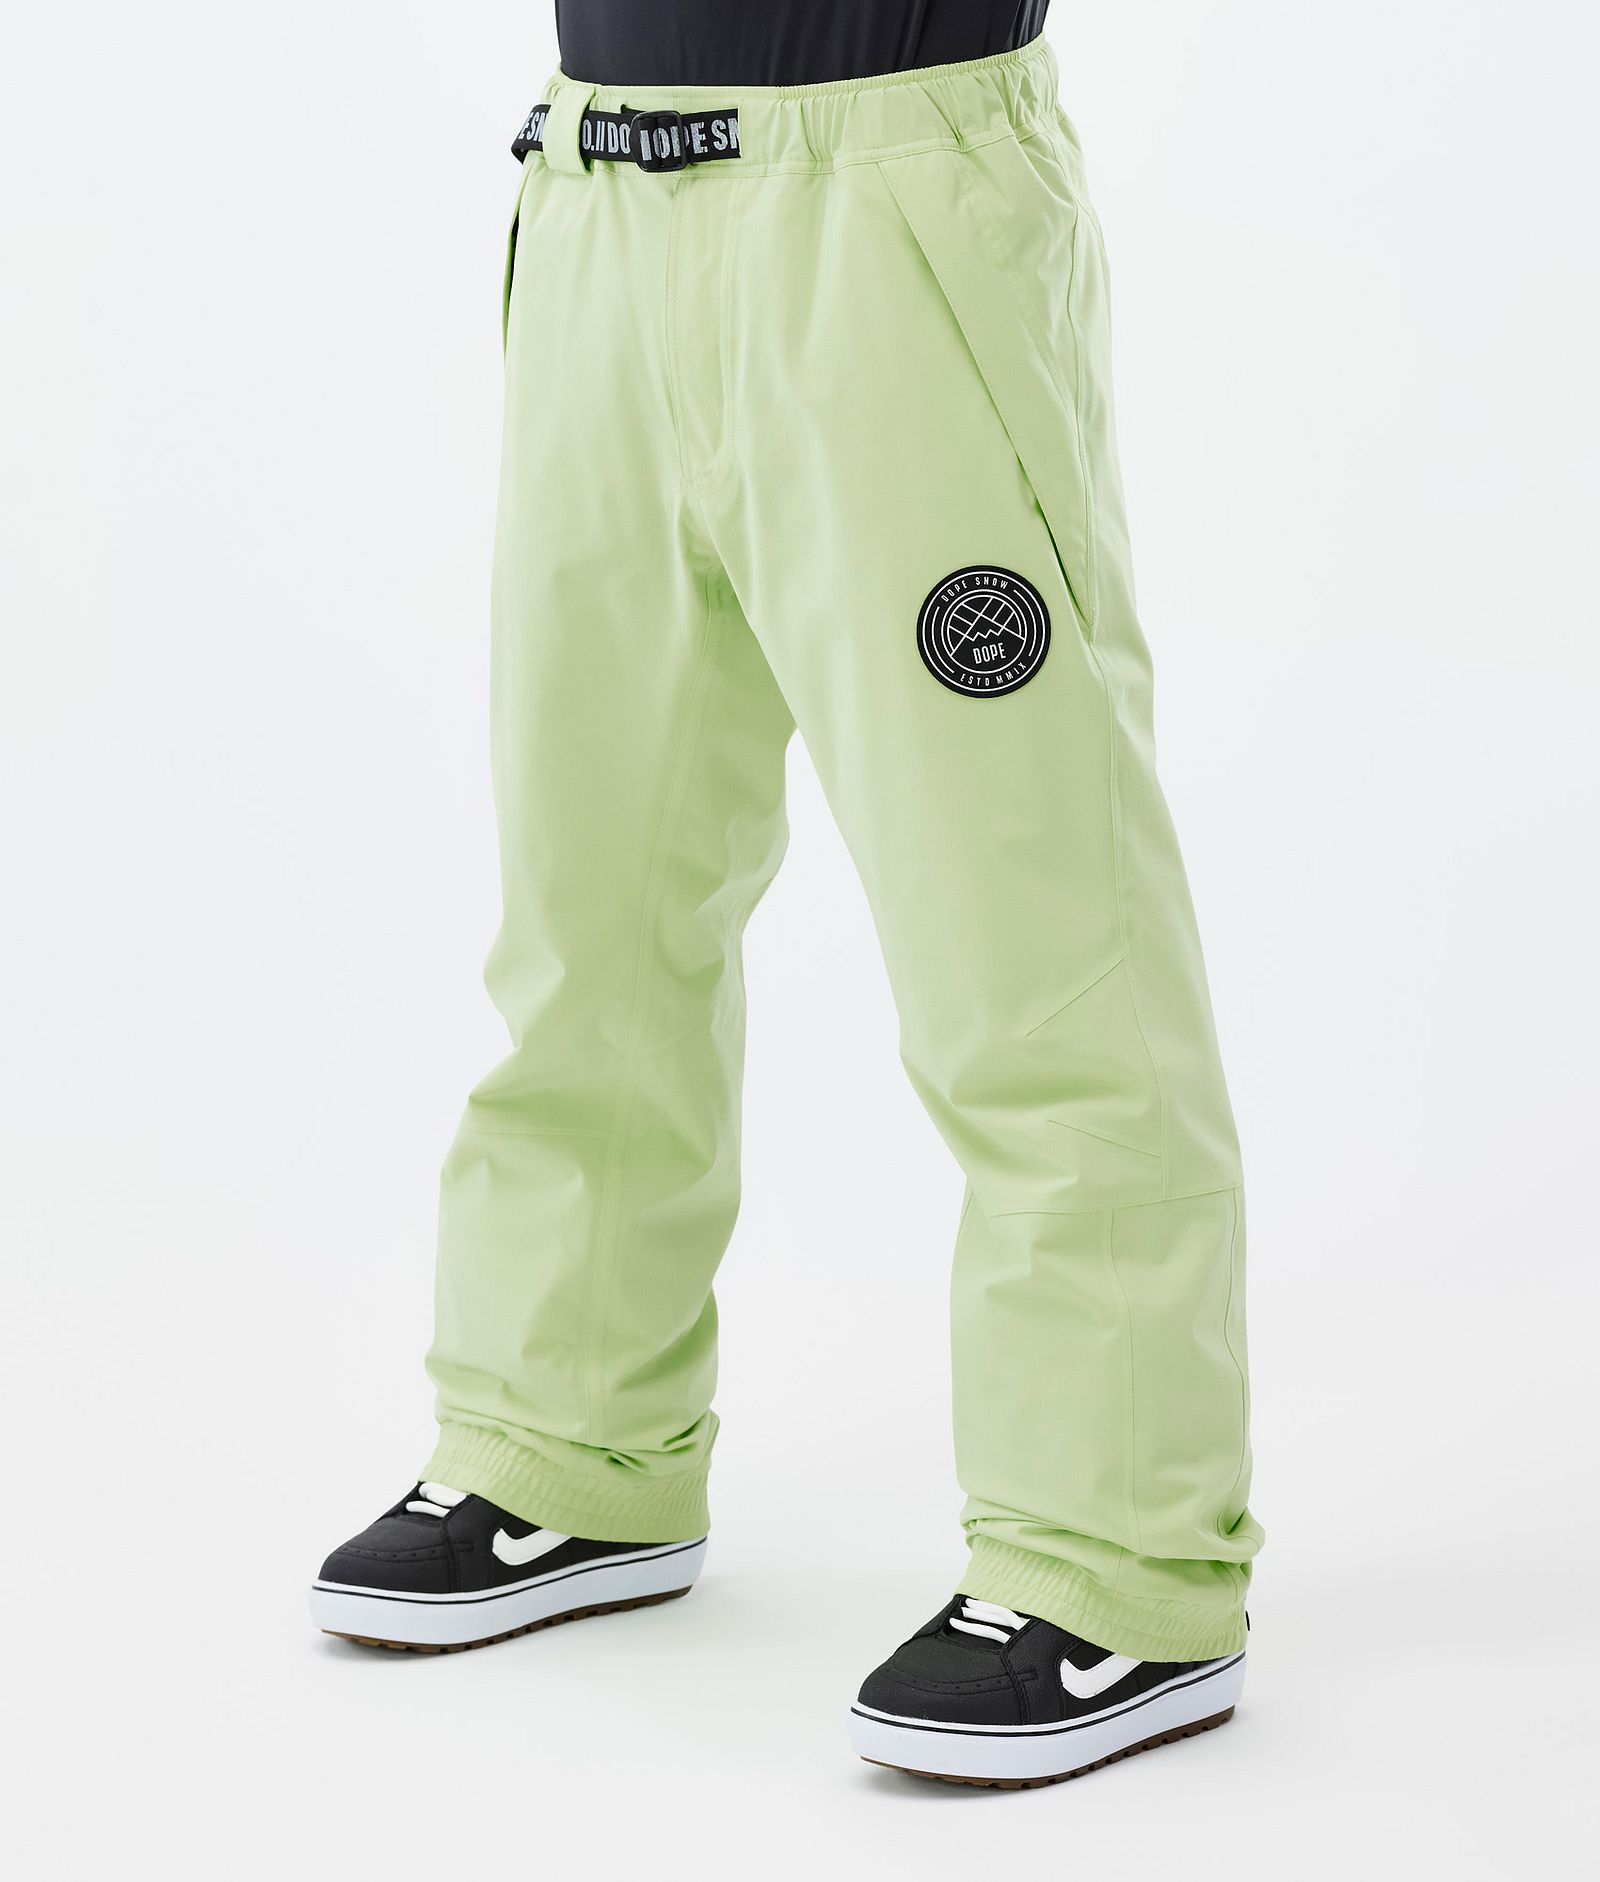 Dope Blizzard Pantalon de Snowboard Homme Faded Neon Renewed, Image 1 sur 5